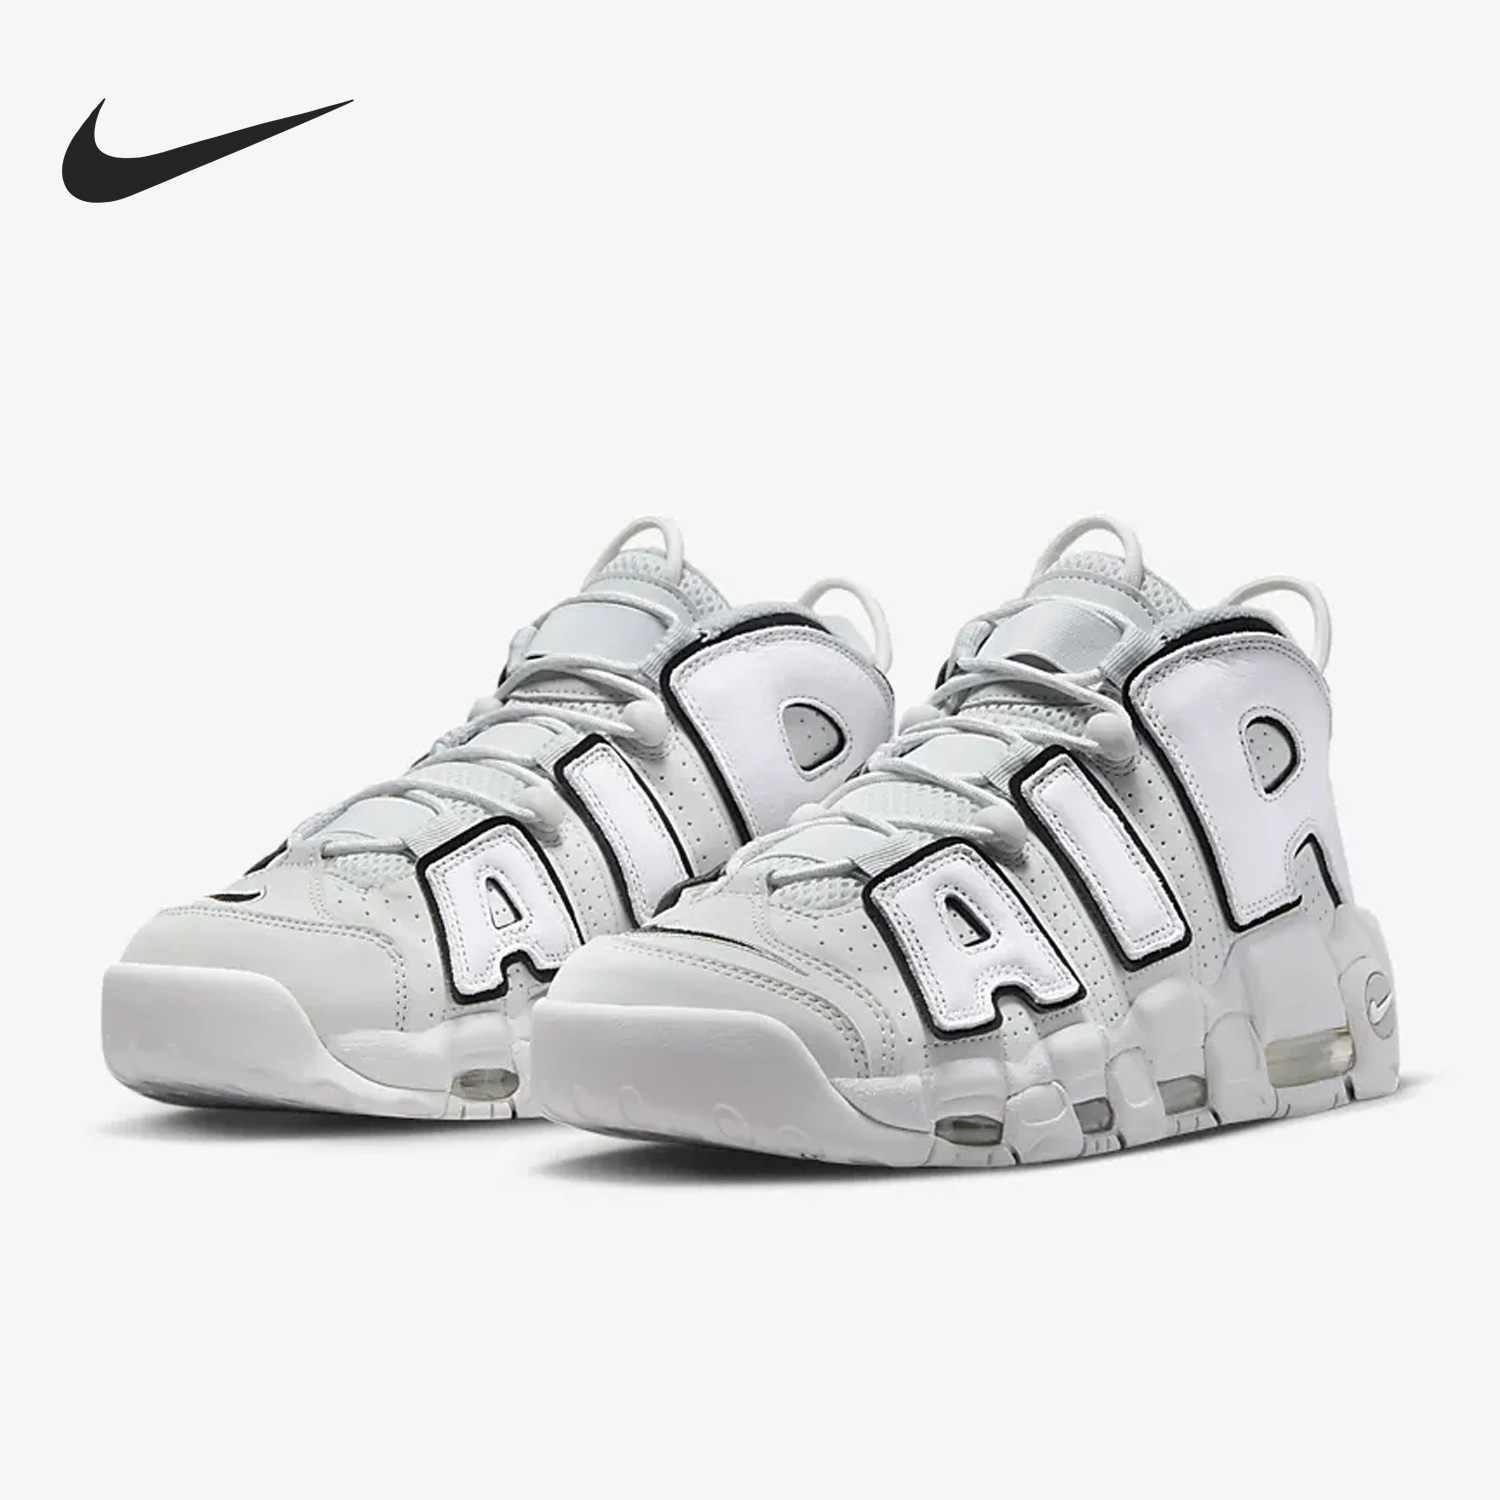 Nike/耐克正品Air More Uptempo男子运动篮球鞋FB3021-001 运动鞋new 篮球鞋 原图主图